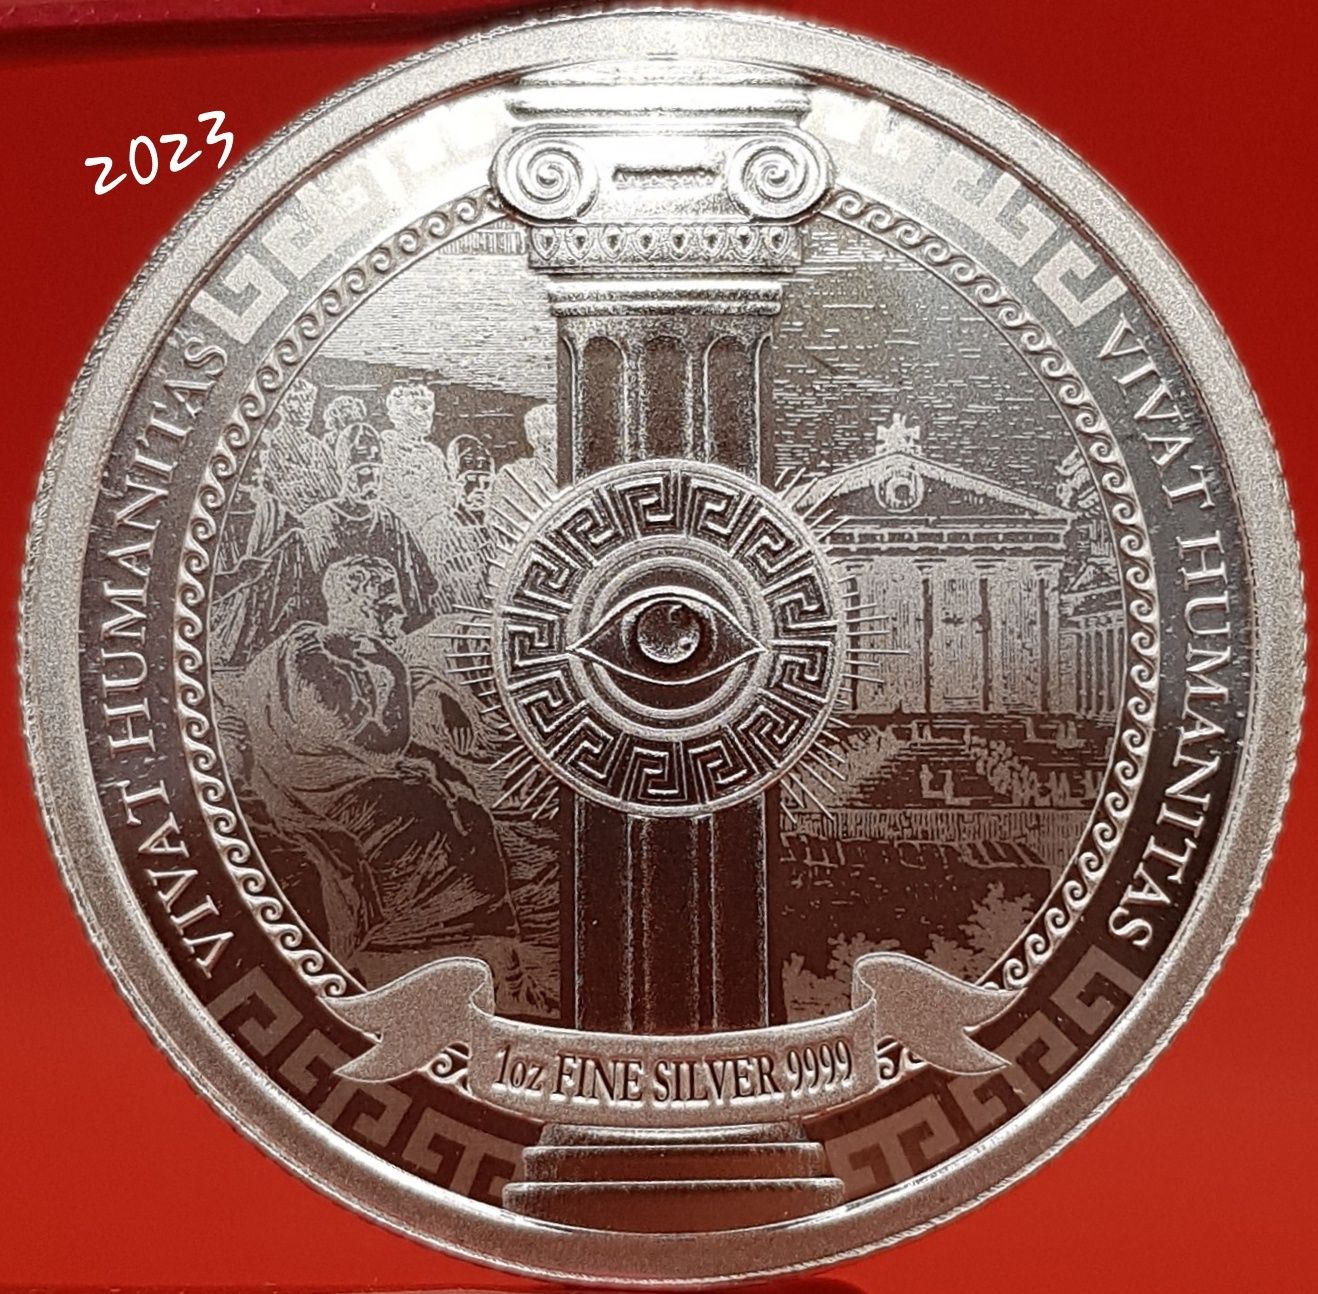 Slovacia, Vivat Humanitas, Magnum Opus, monede argint 999